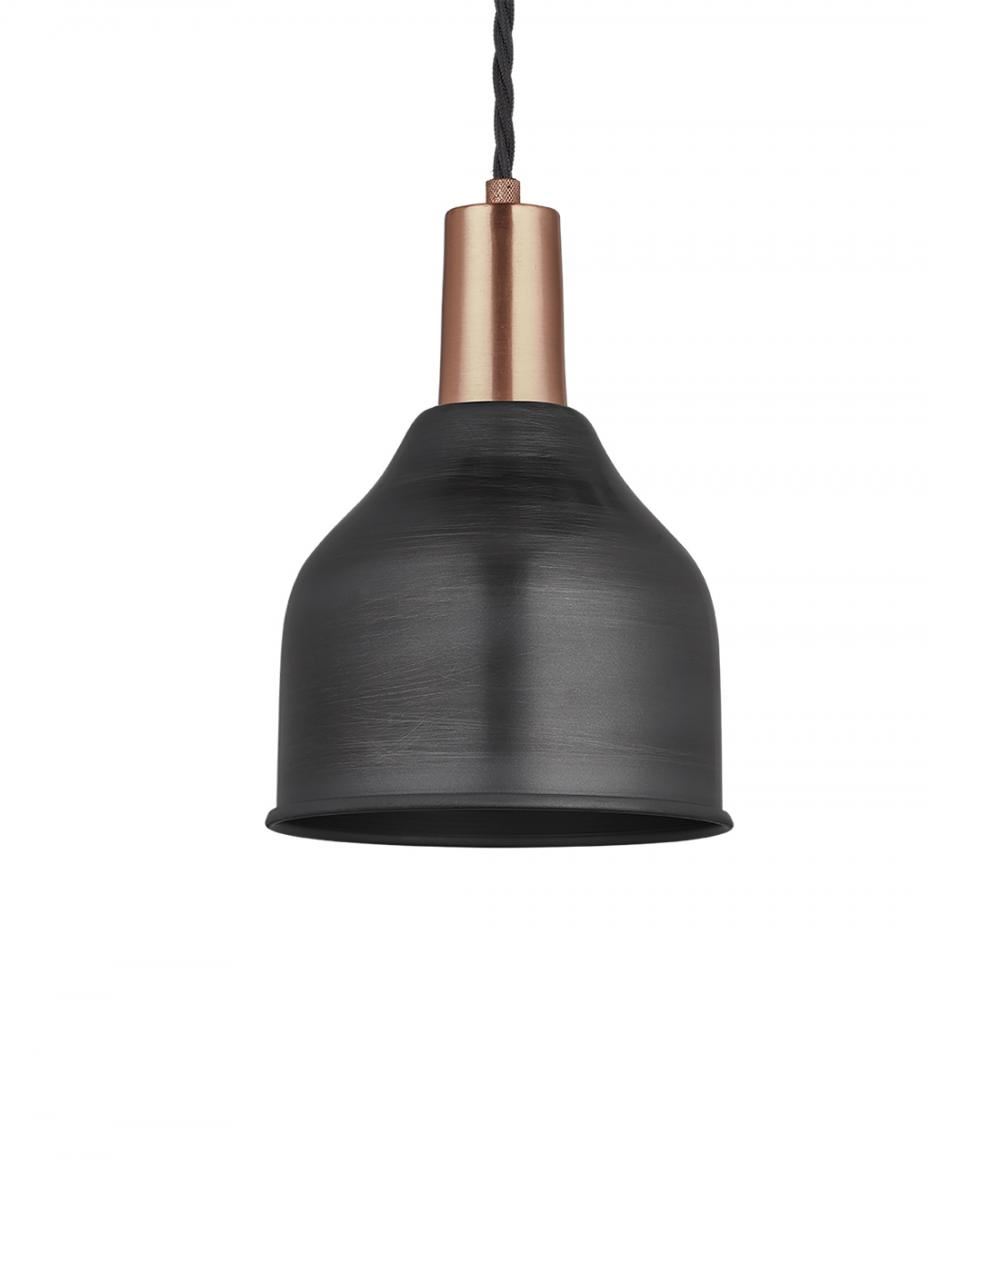 Industville Brooklyn Cone Pendant Sleek Fittings Small Pewter Shade Copper Holder Grey Designer Pendant Lighting